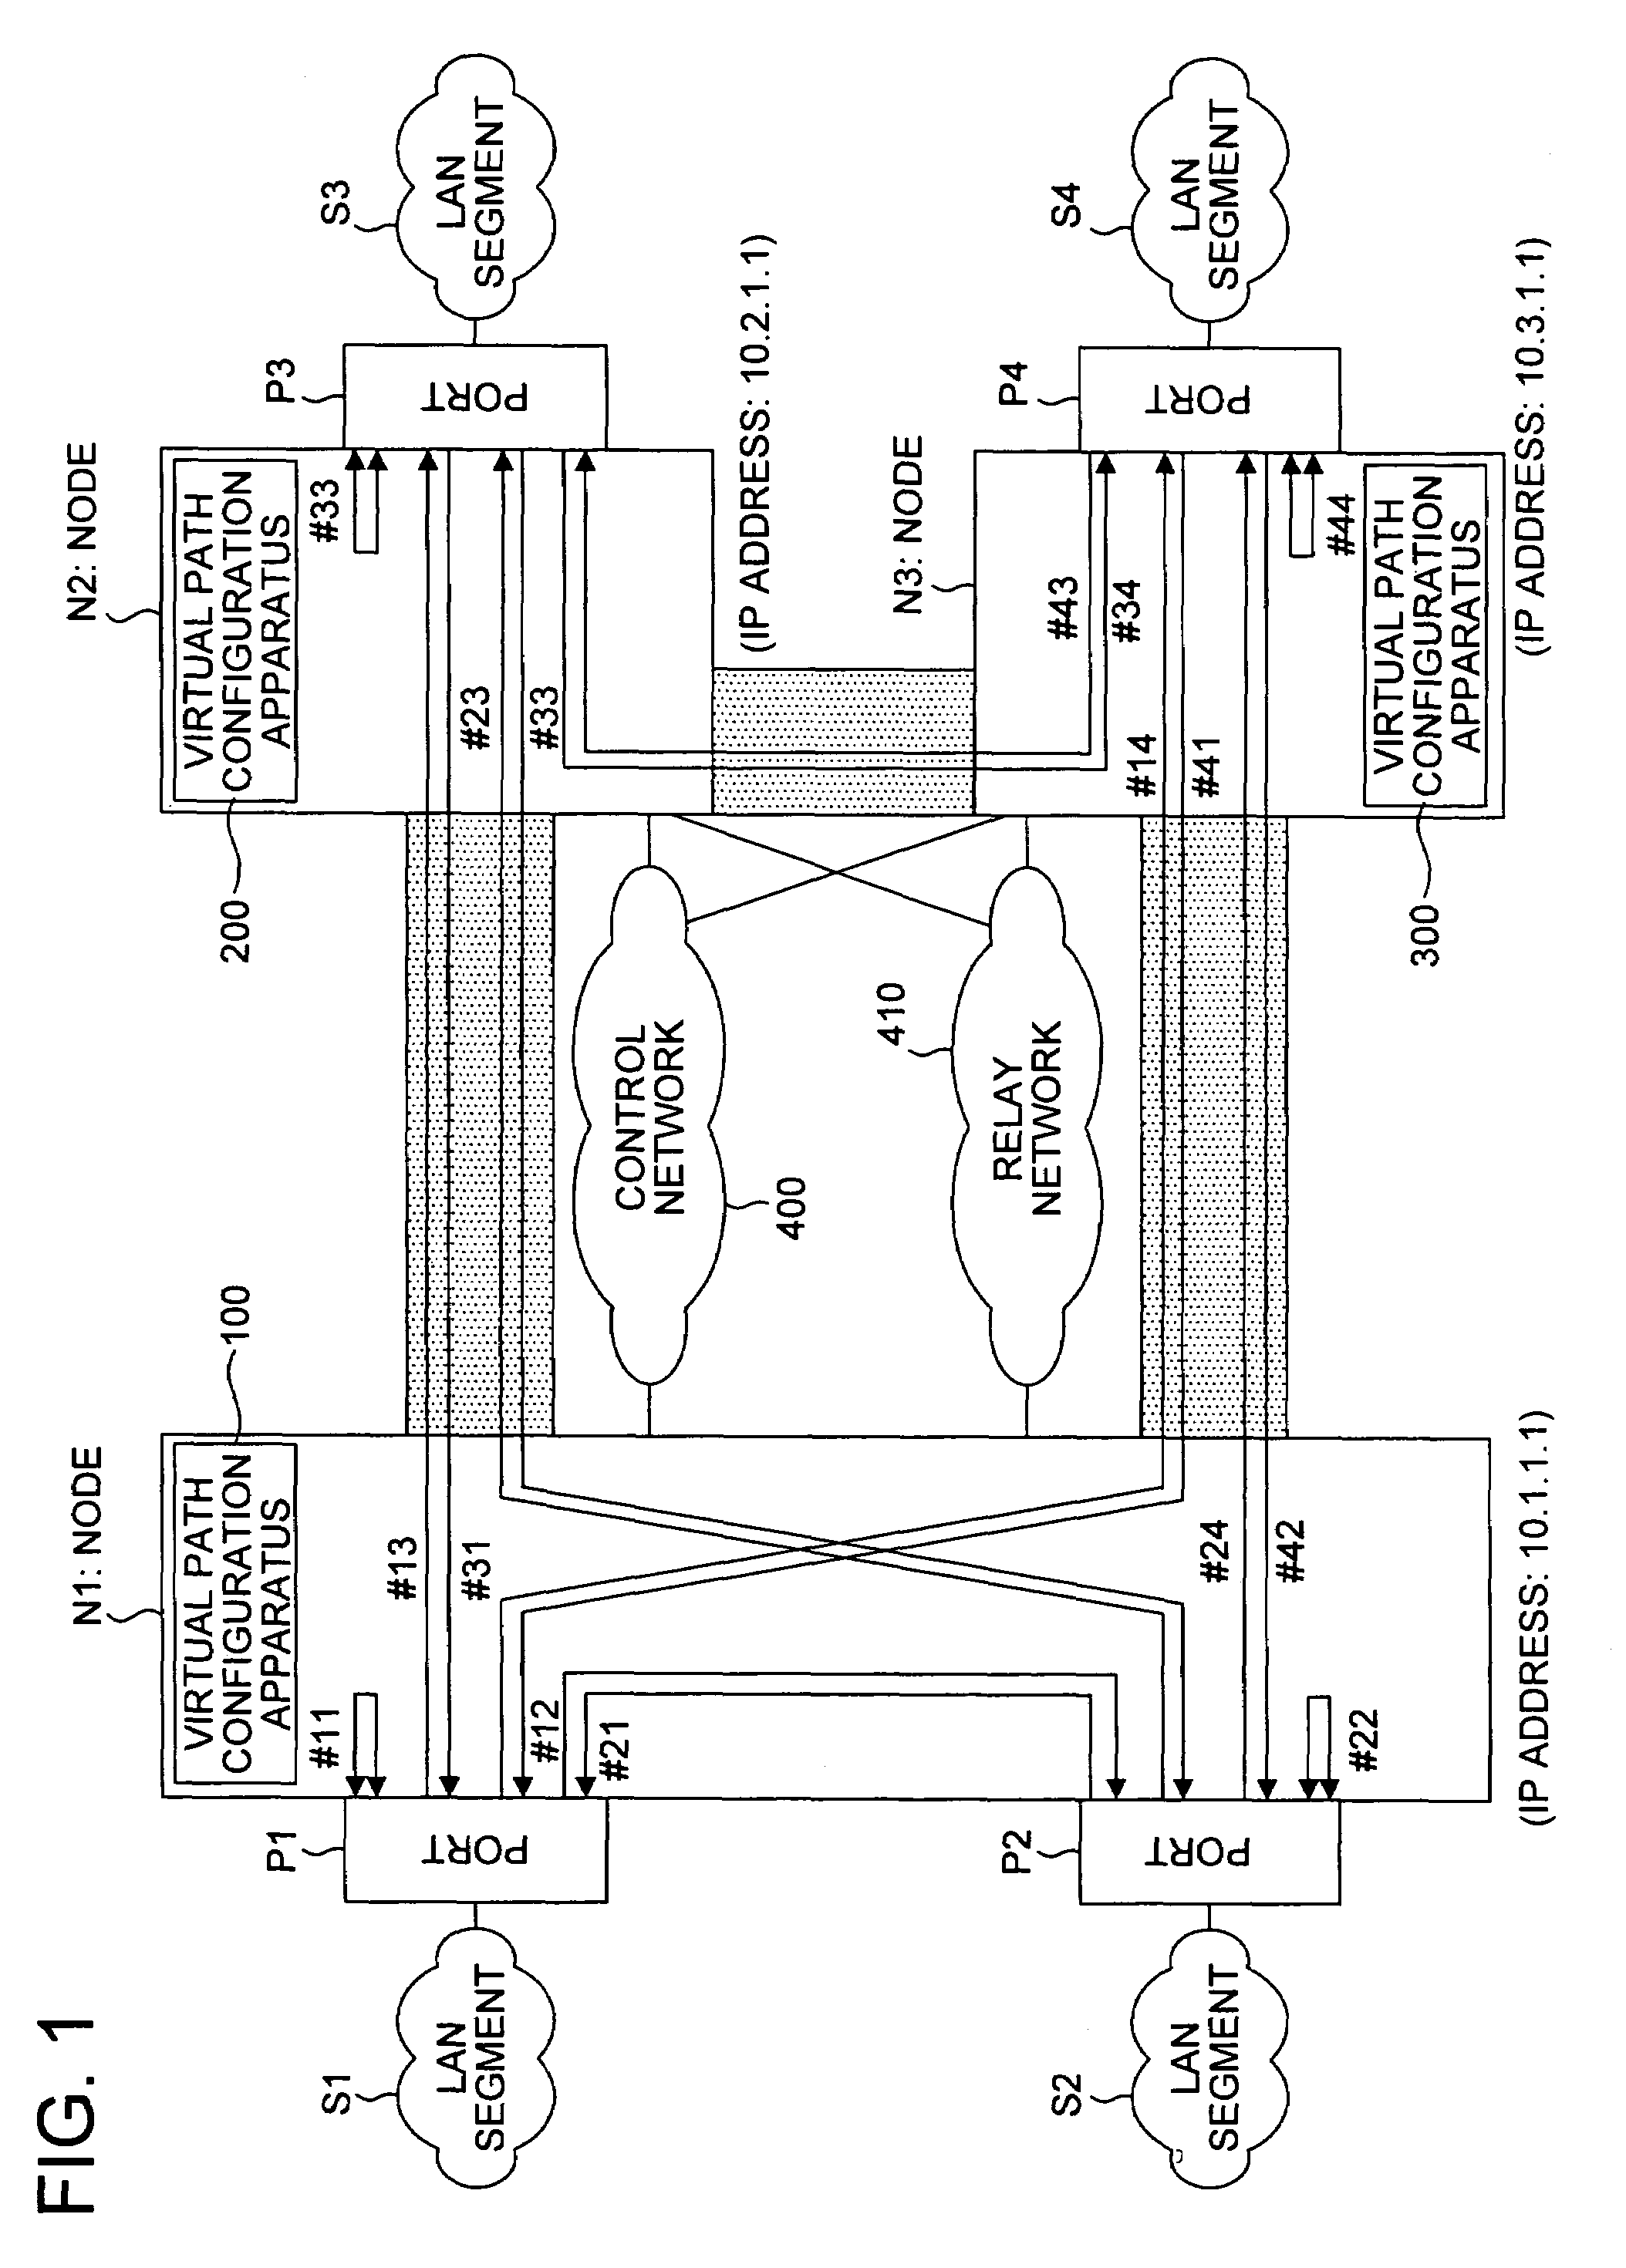 Virtual path configuration apparatus, virtual path configuration method, and computer product